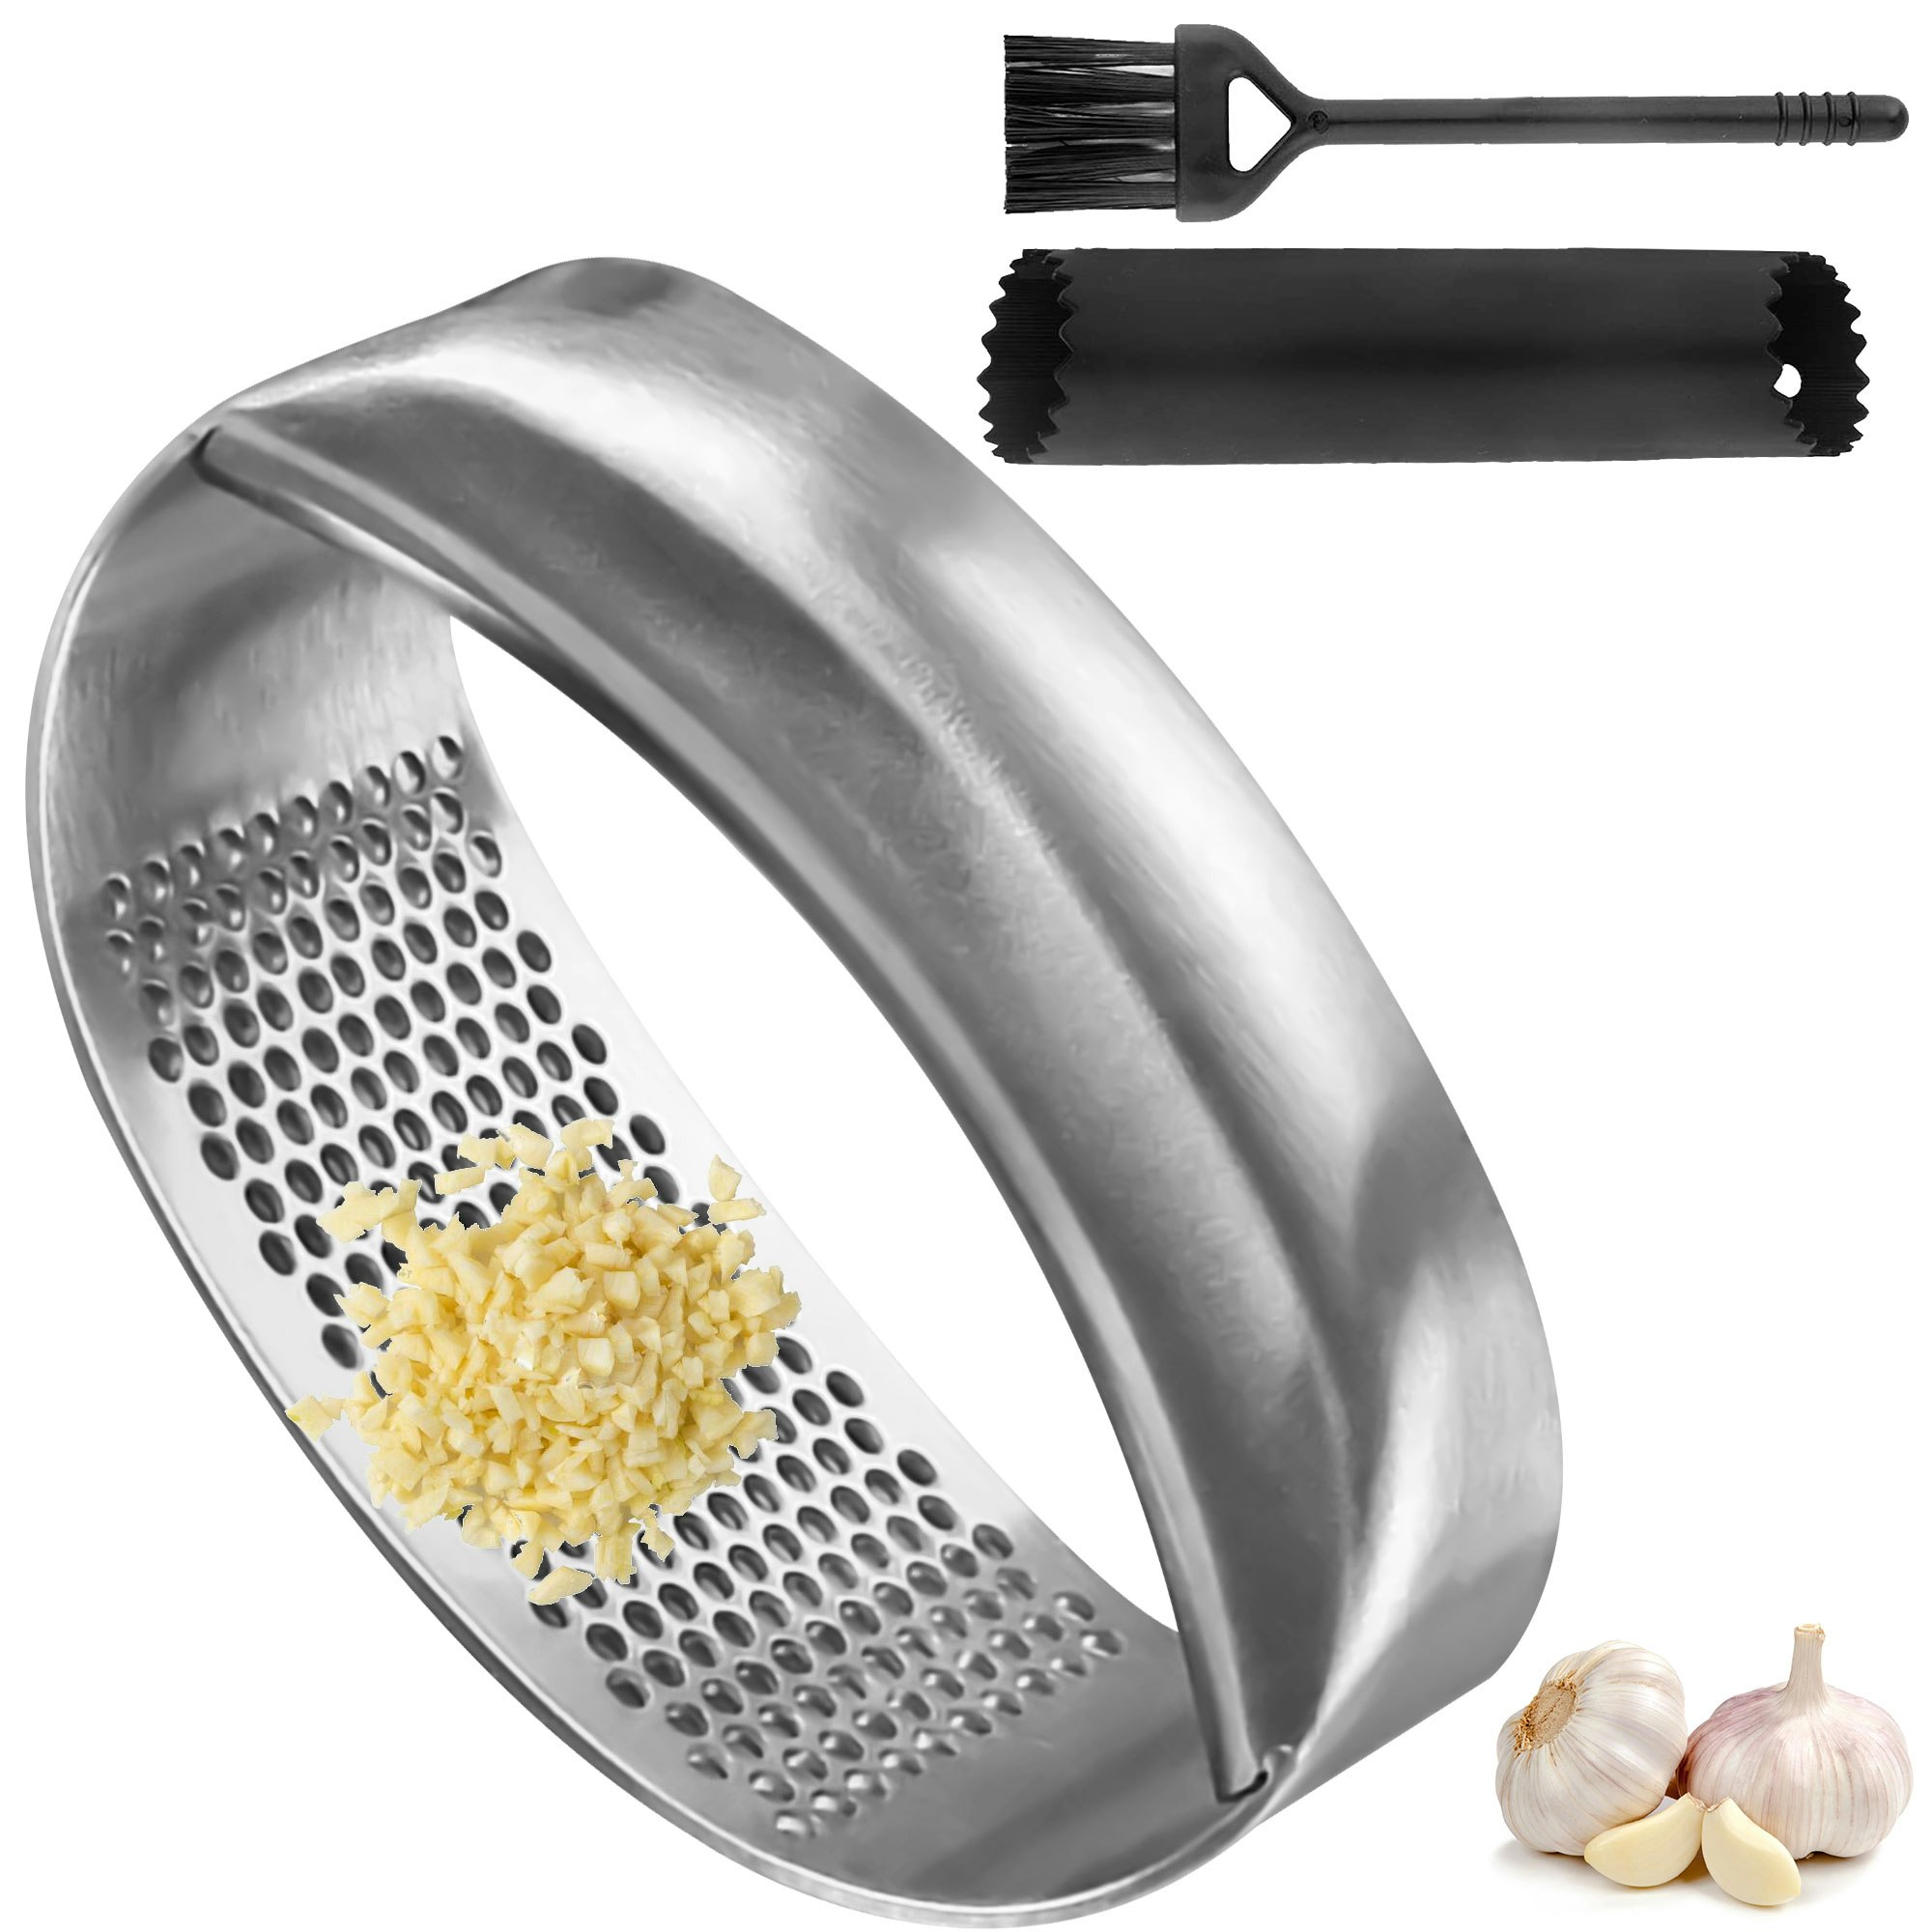  Garlic Press Rocker Stainless Steel Ginger Crusher Squeezer  Kitchen Gadget with Ergonomic handle, Silicone Tube Garlic Peeler and  Cleaning Brush Tool Set: Home & Kitchen